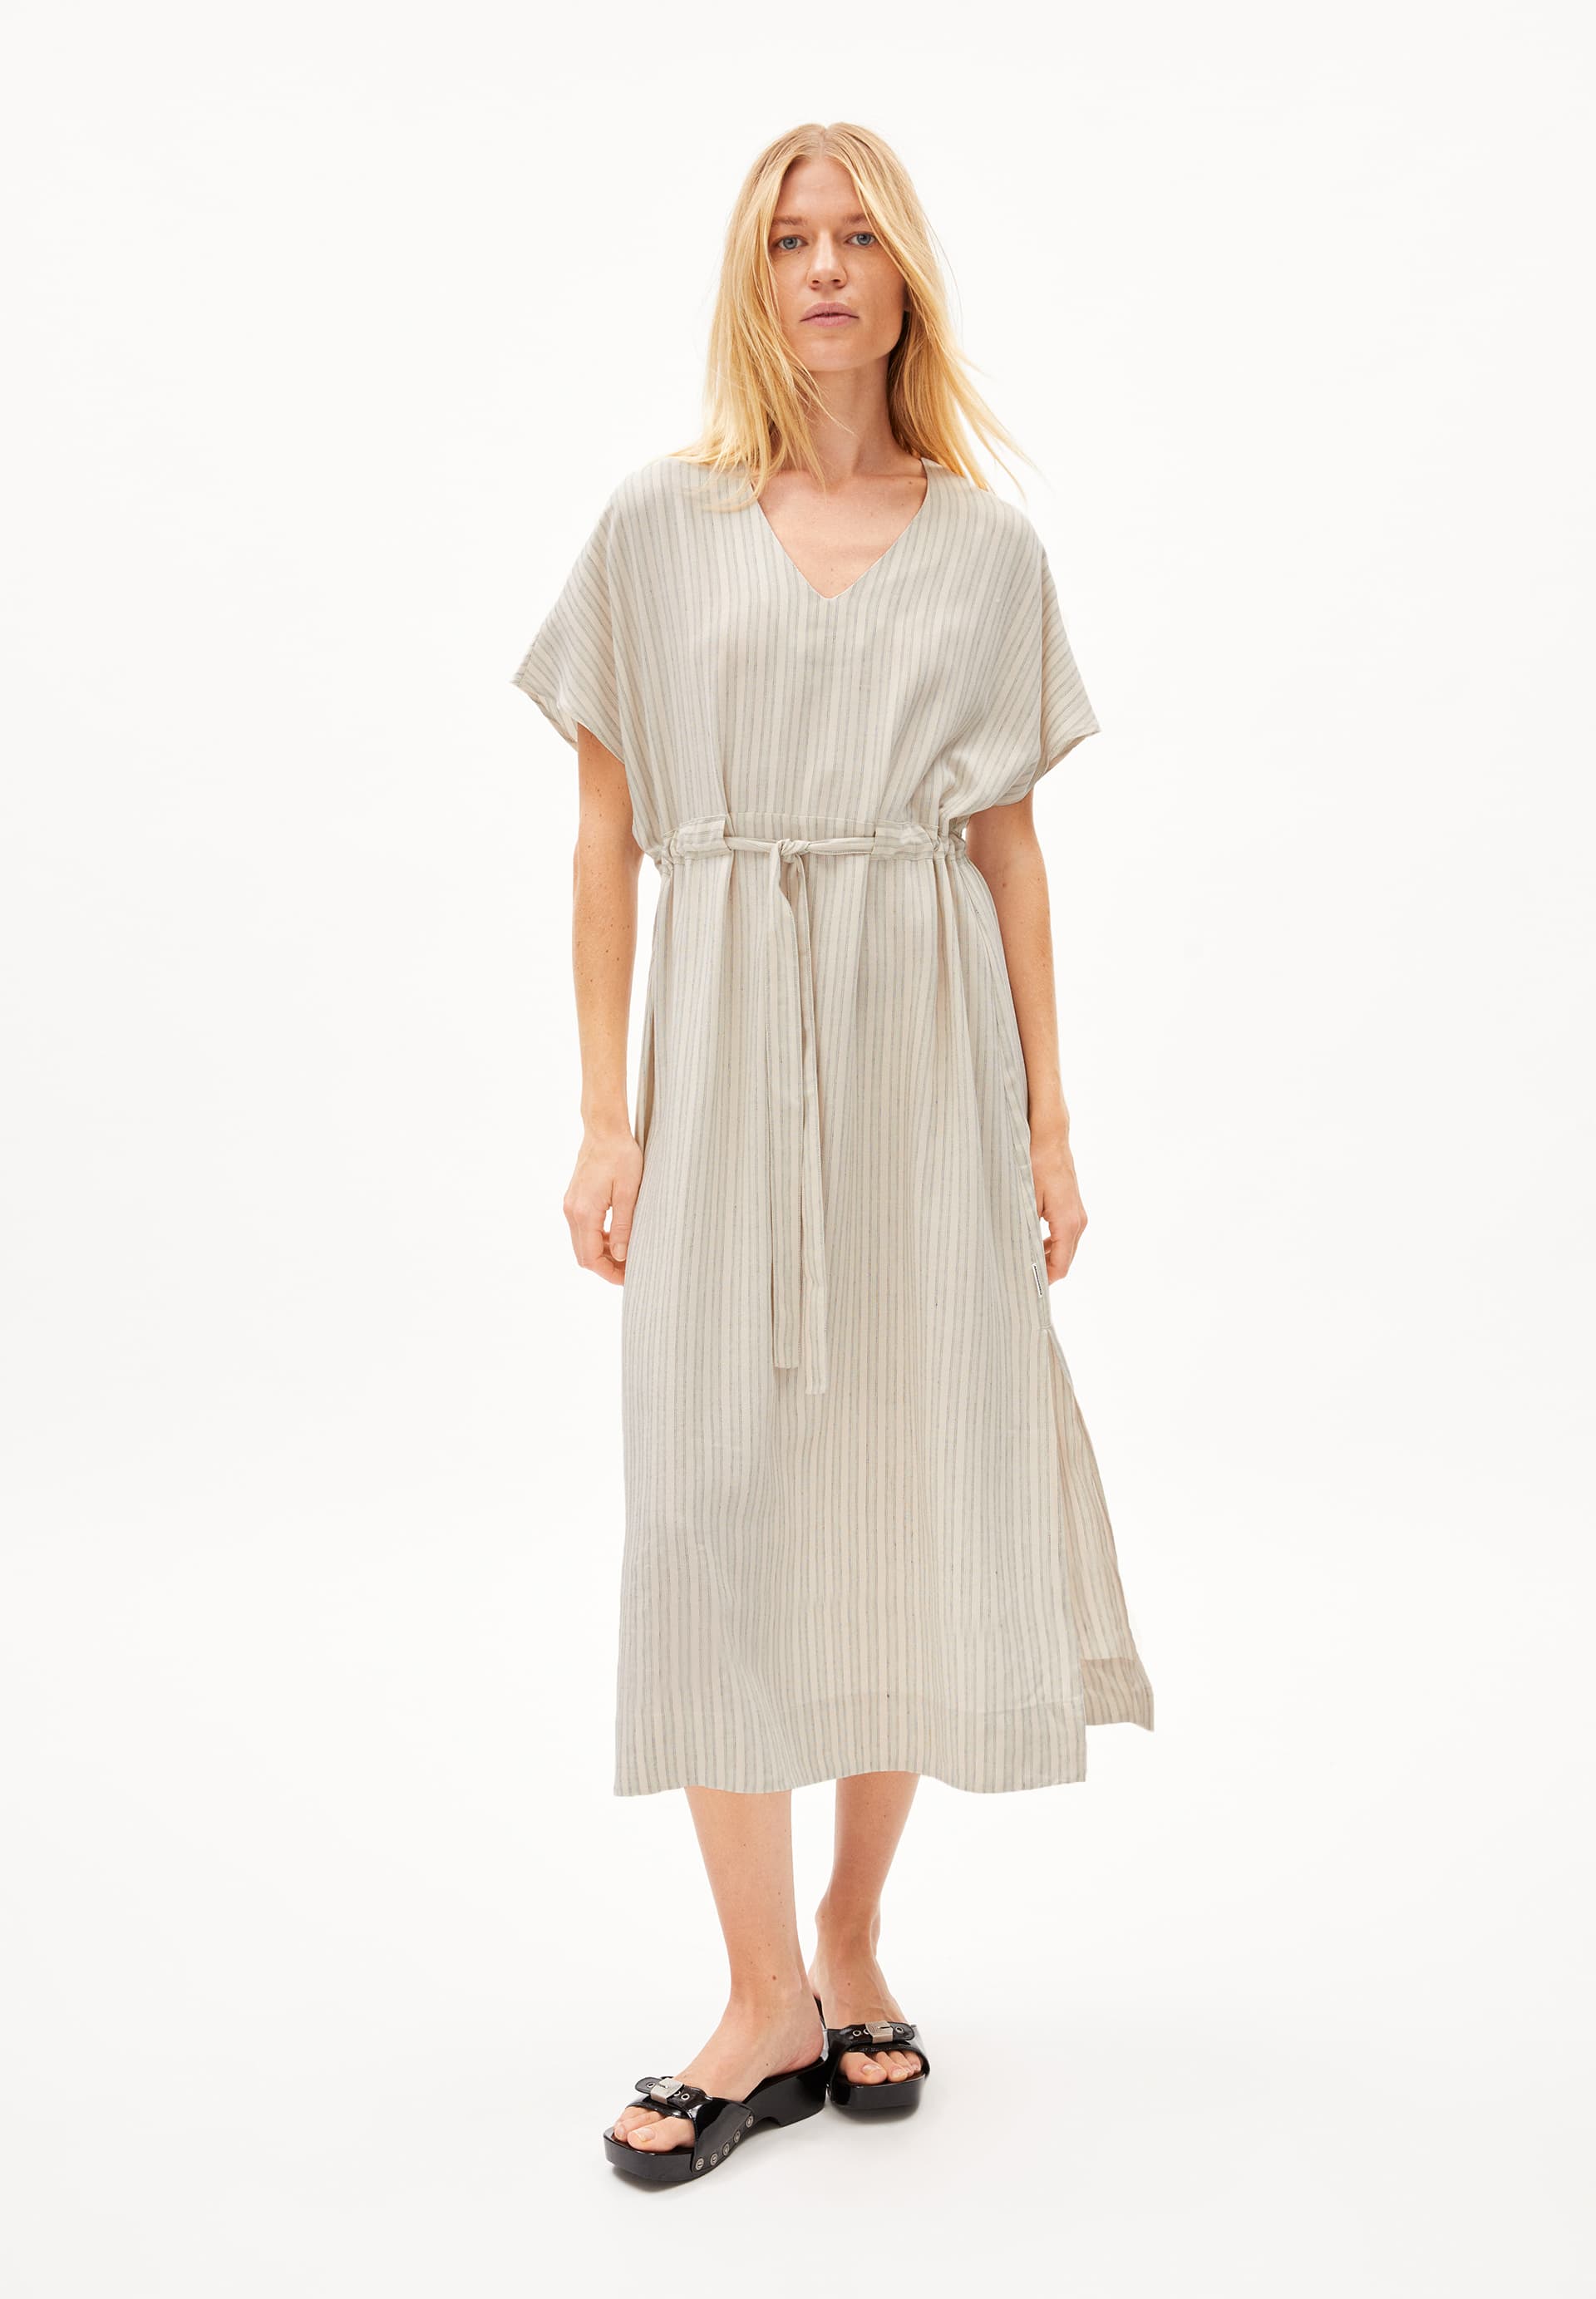 MAAHALIANA LINO STRIPES Woven Dress Relaxed Fit made of Linen-Mix